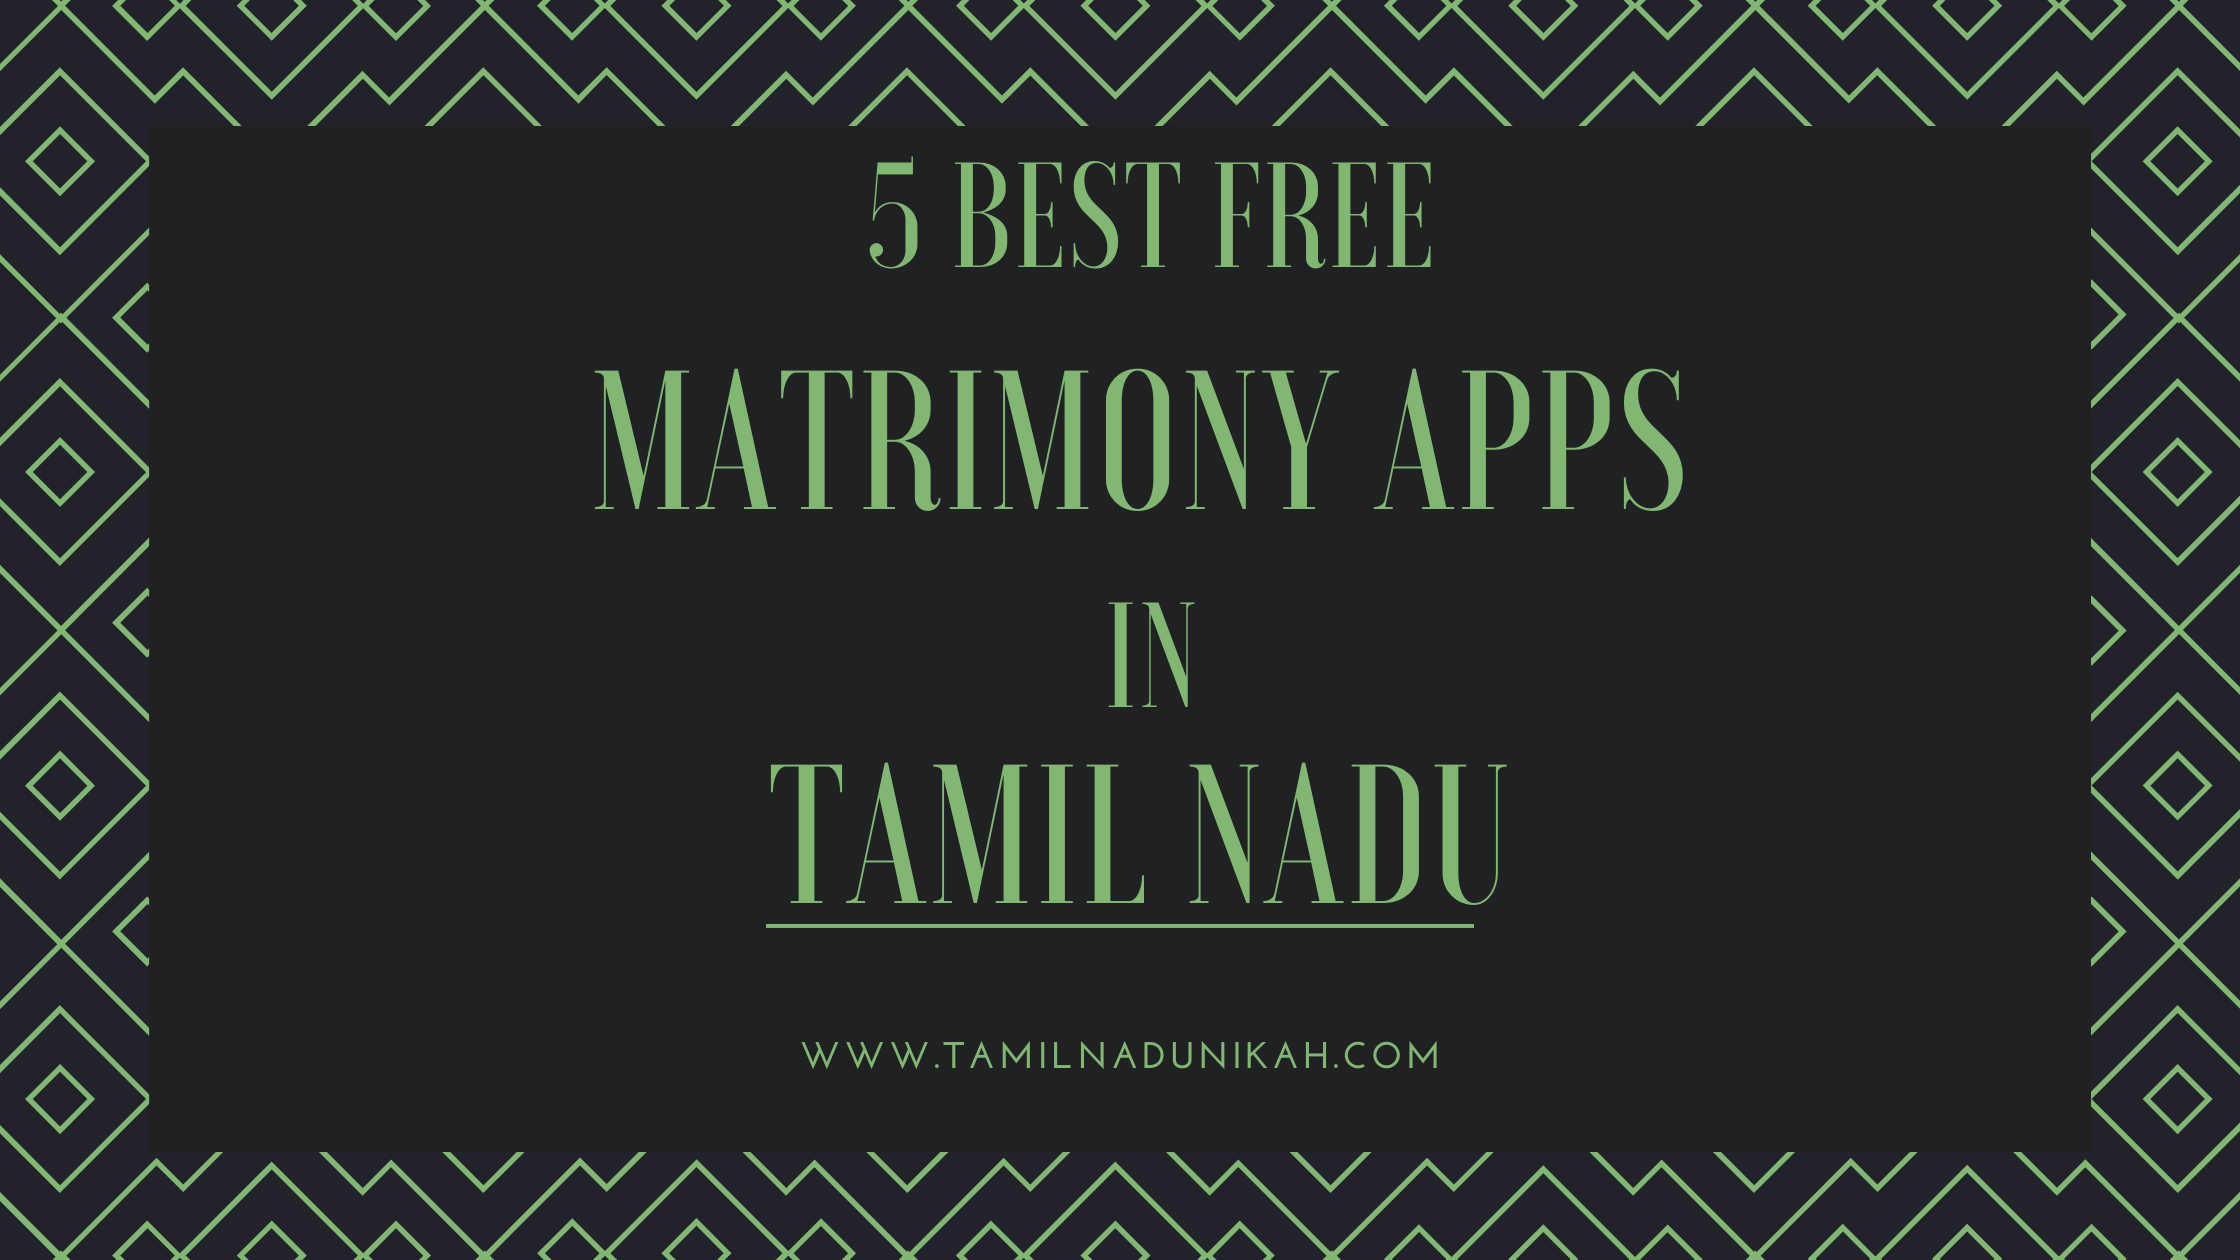 https://www.tamilnadunikah.com/muslim_matrimony/wp-content/uploads/2021/10/5_BEST_FREE_MATRIMONY_APPS_IN_TAMIL_NADU-1.png